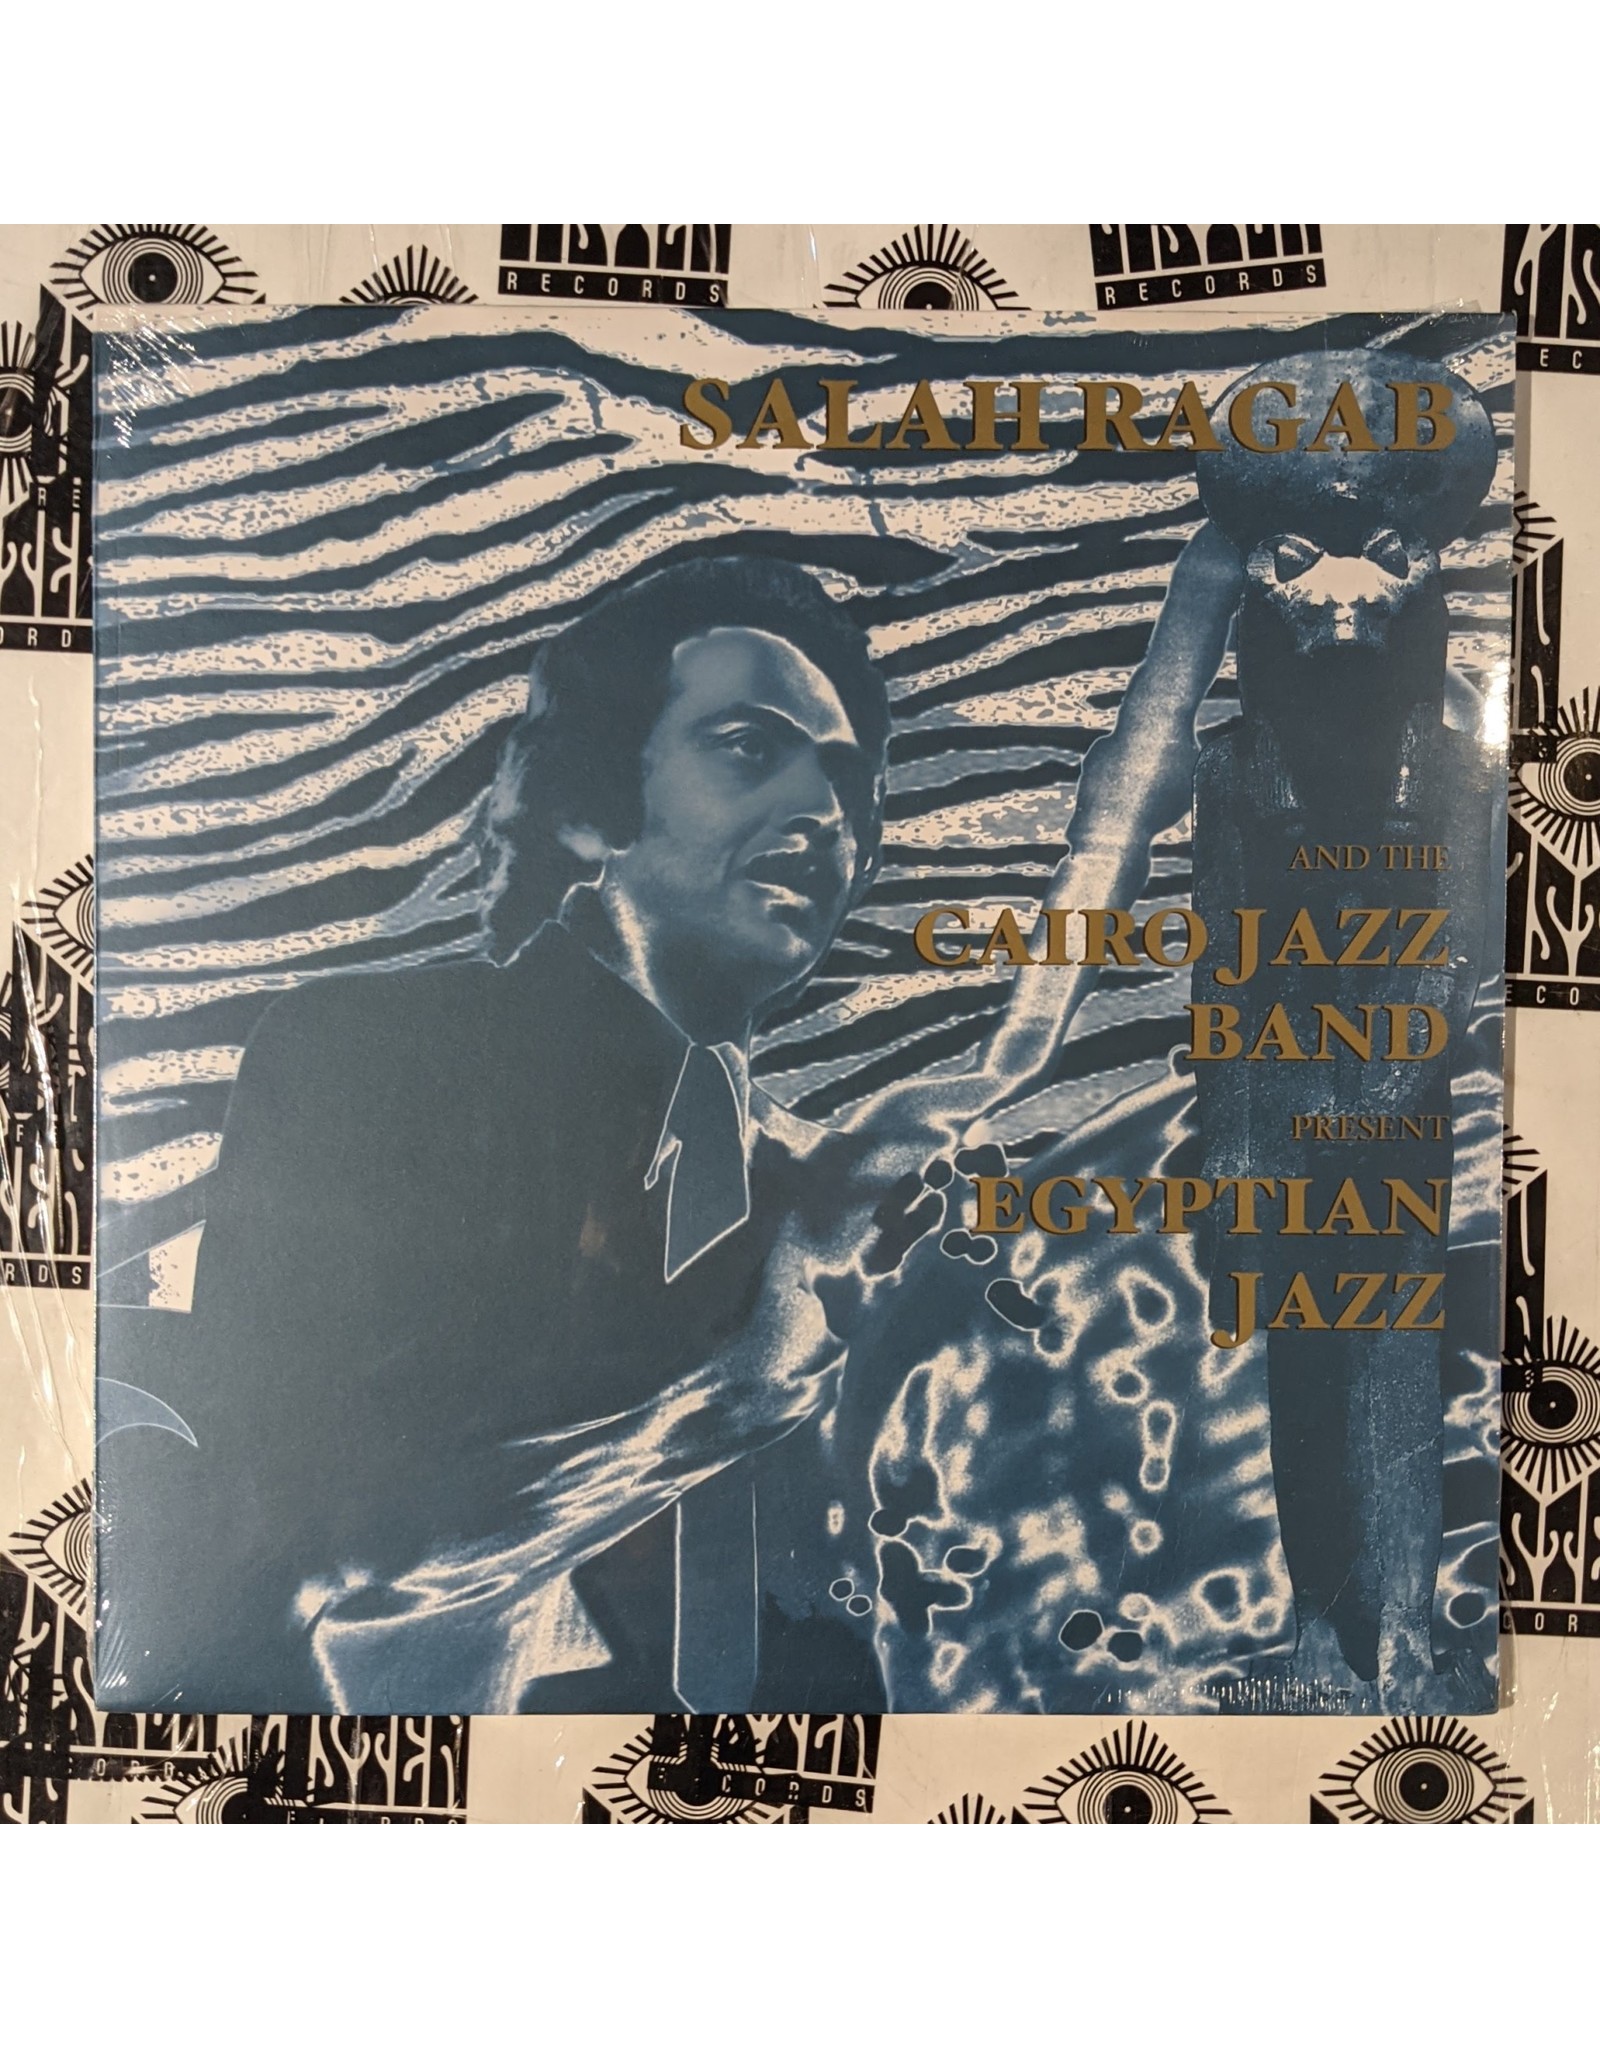 USED: Salah Ragab & The Cairo Jazz Band: Egyptian Jazz LP